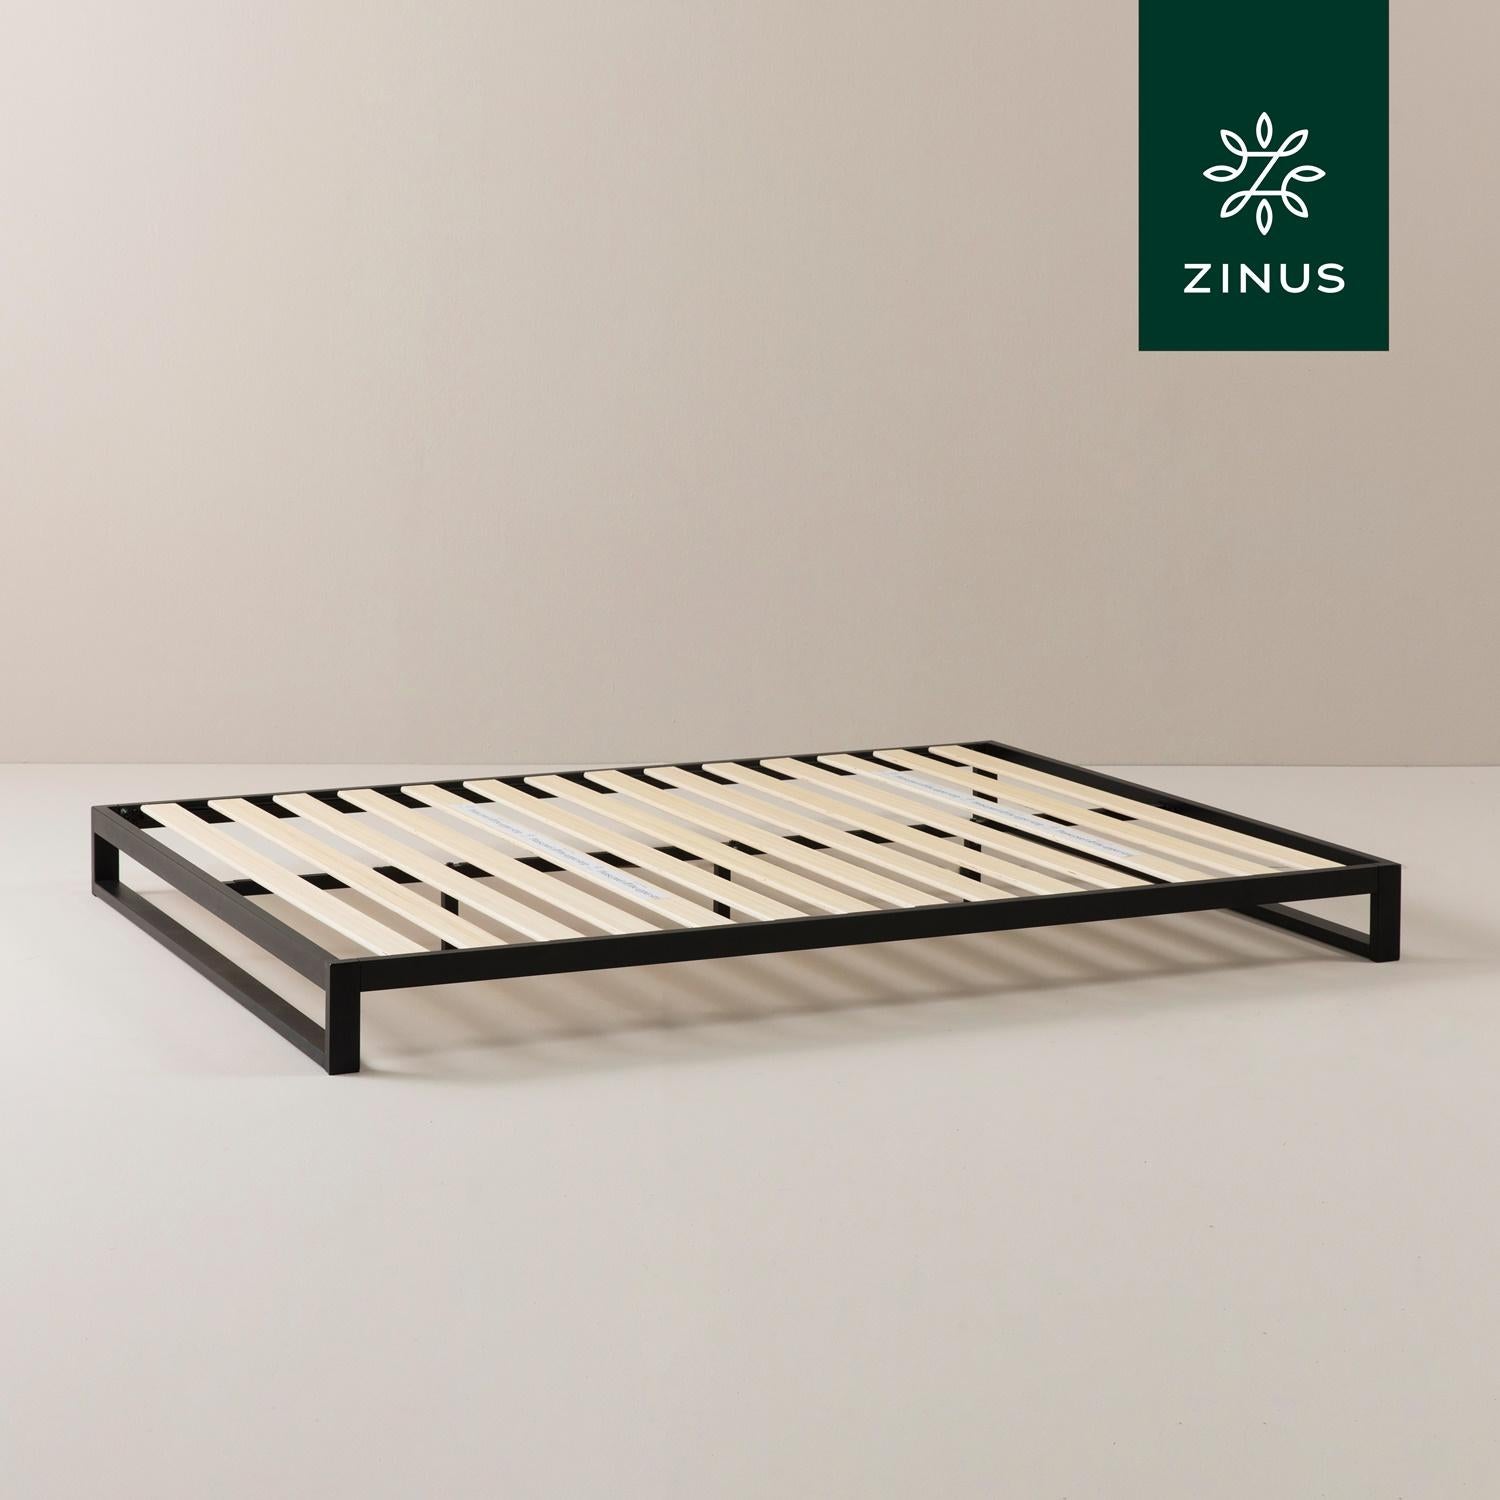 Zinus Trisha 18cm Heavy Duty Low Profile Platform Base Metal Bed Frame